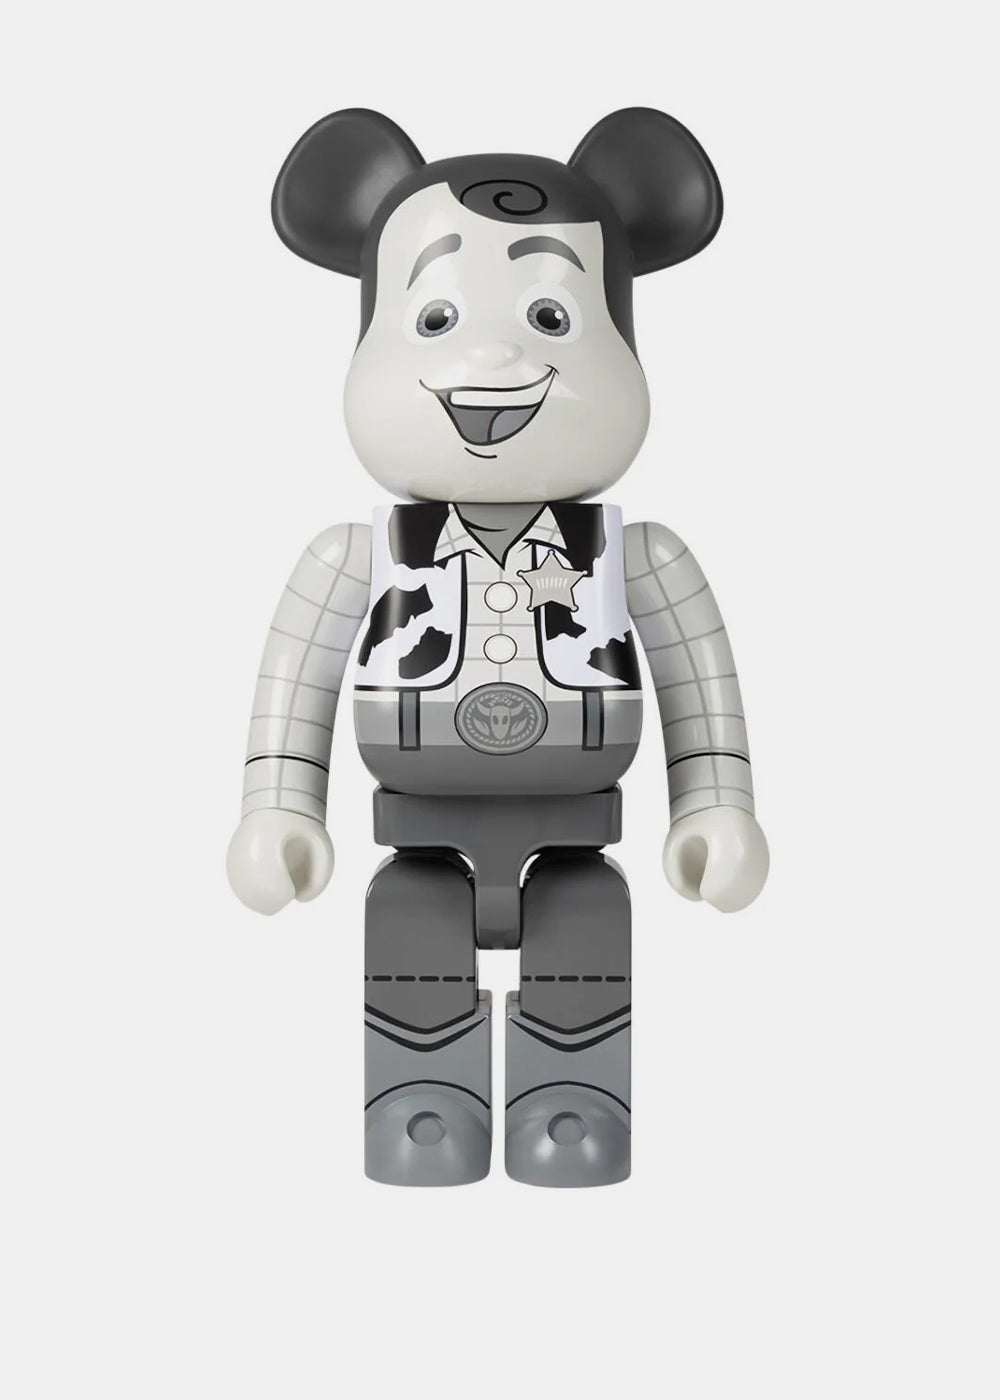 Medicom Toy Be@rbrick Disney Woody B&W Ver. - 1000% - NOBLEMARS